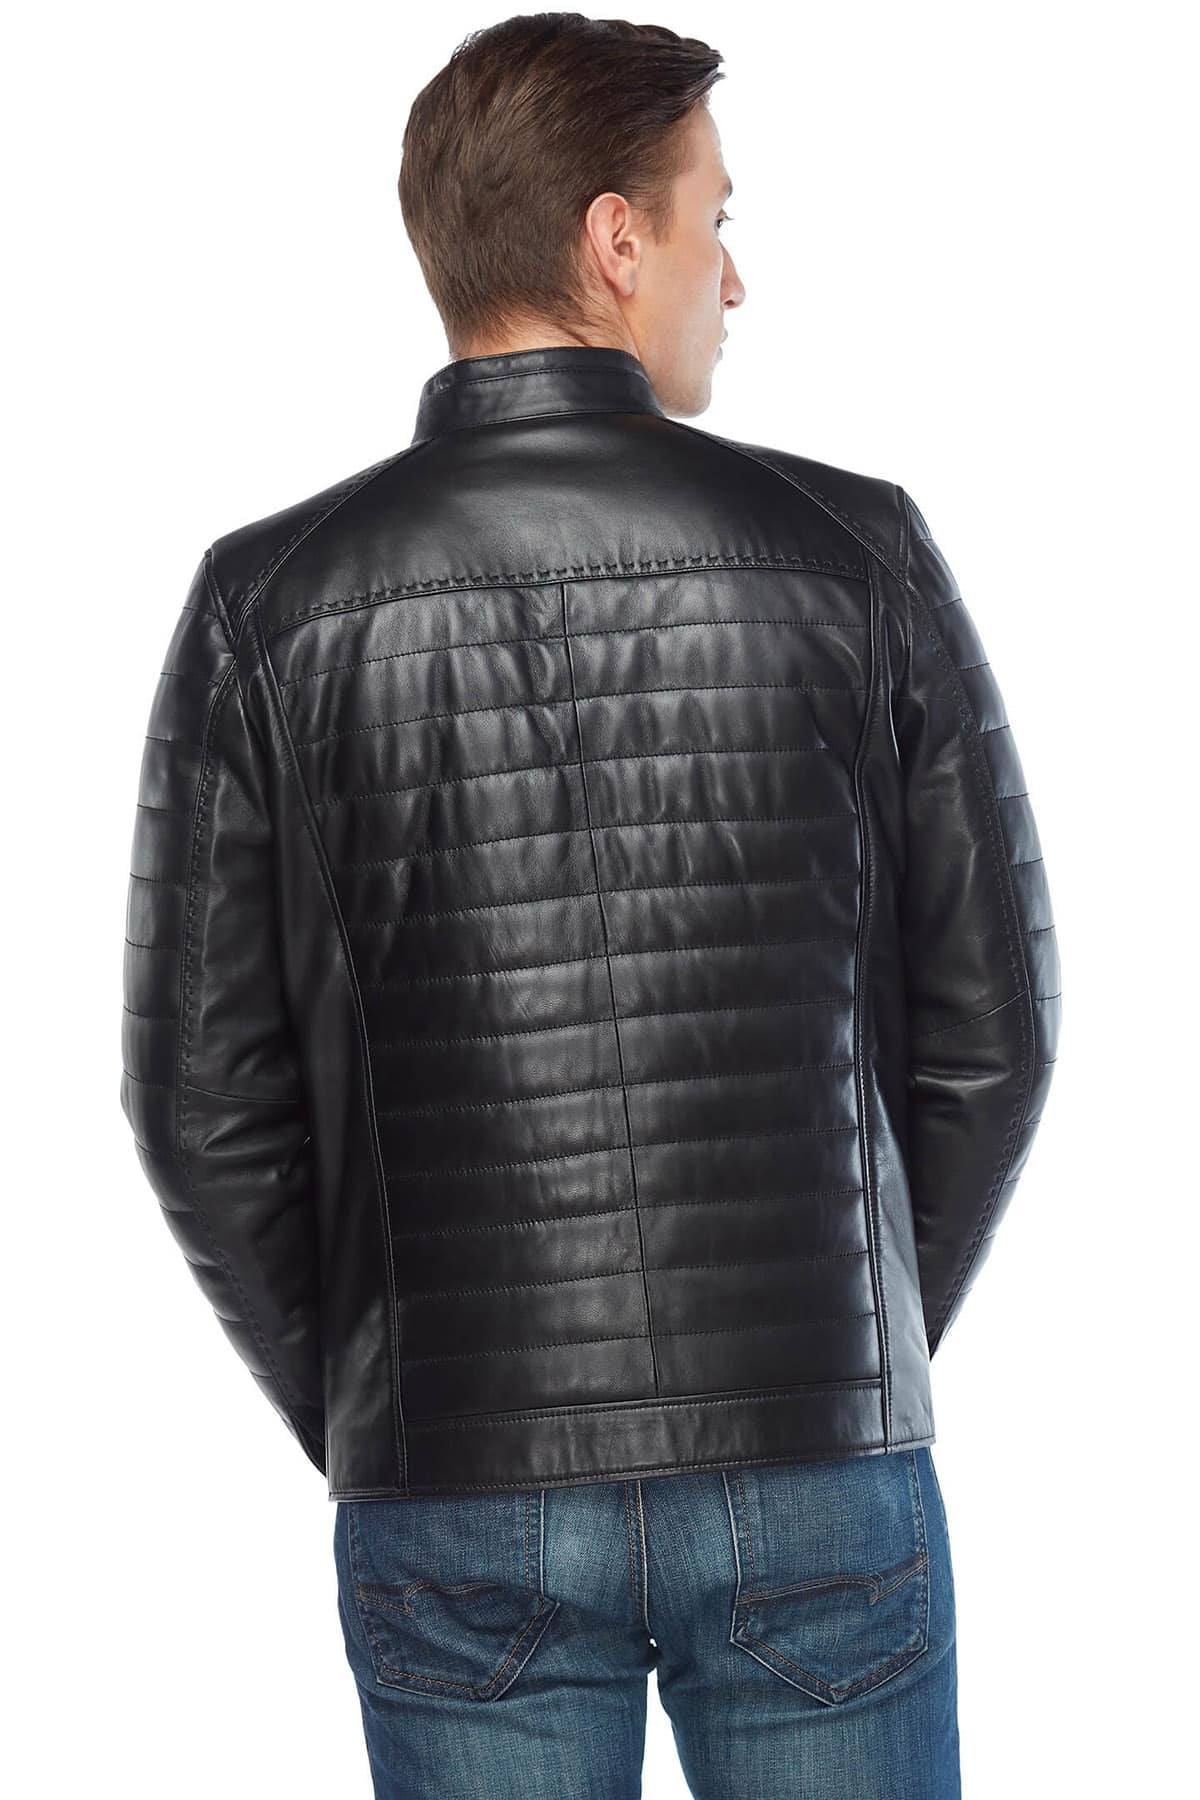 Josh O’Connor Black Genuine Leather Men’s Coat Back